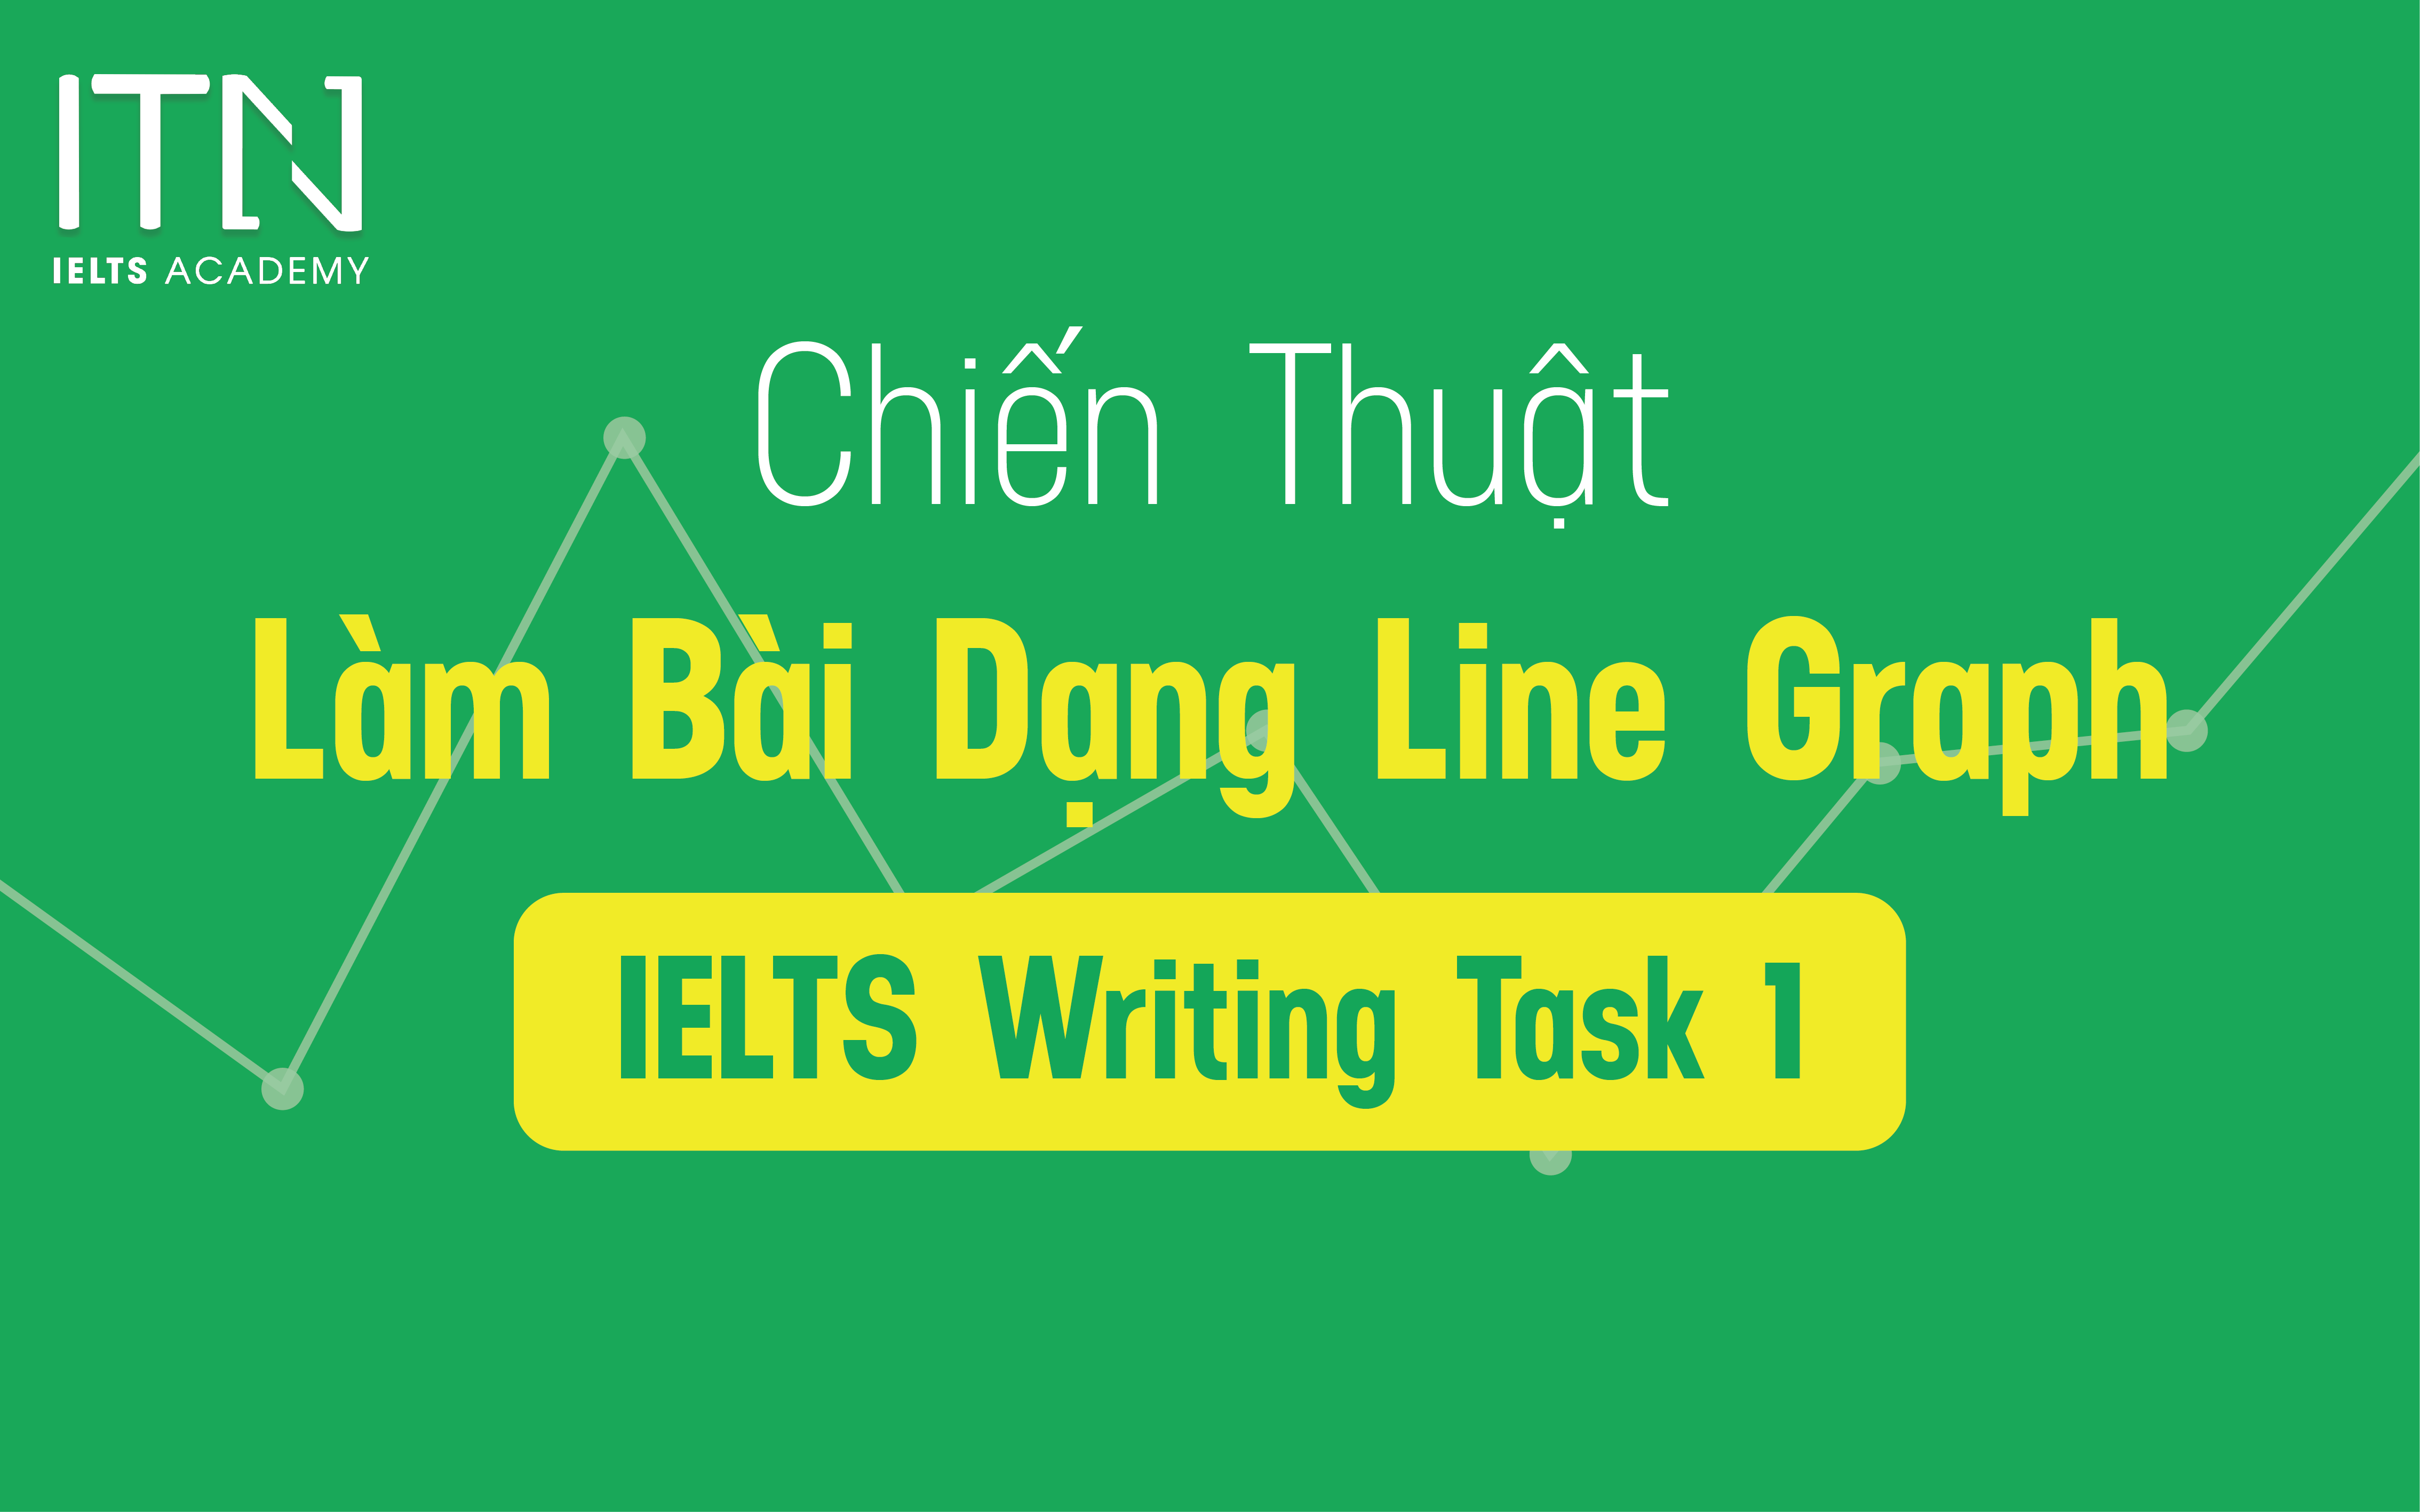 Line Graph IELTS Writing